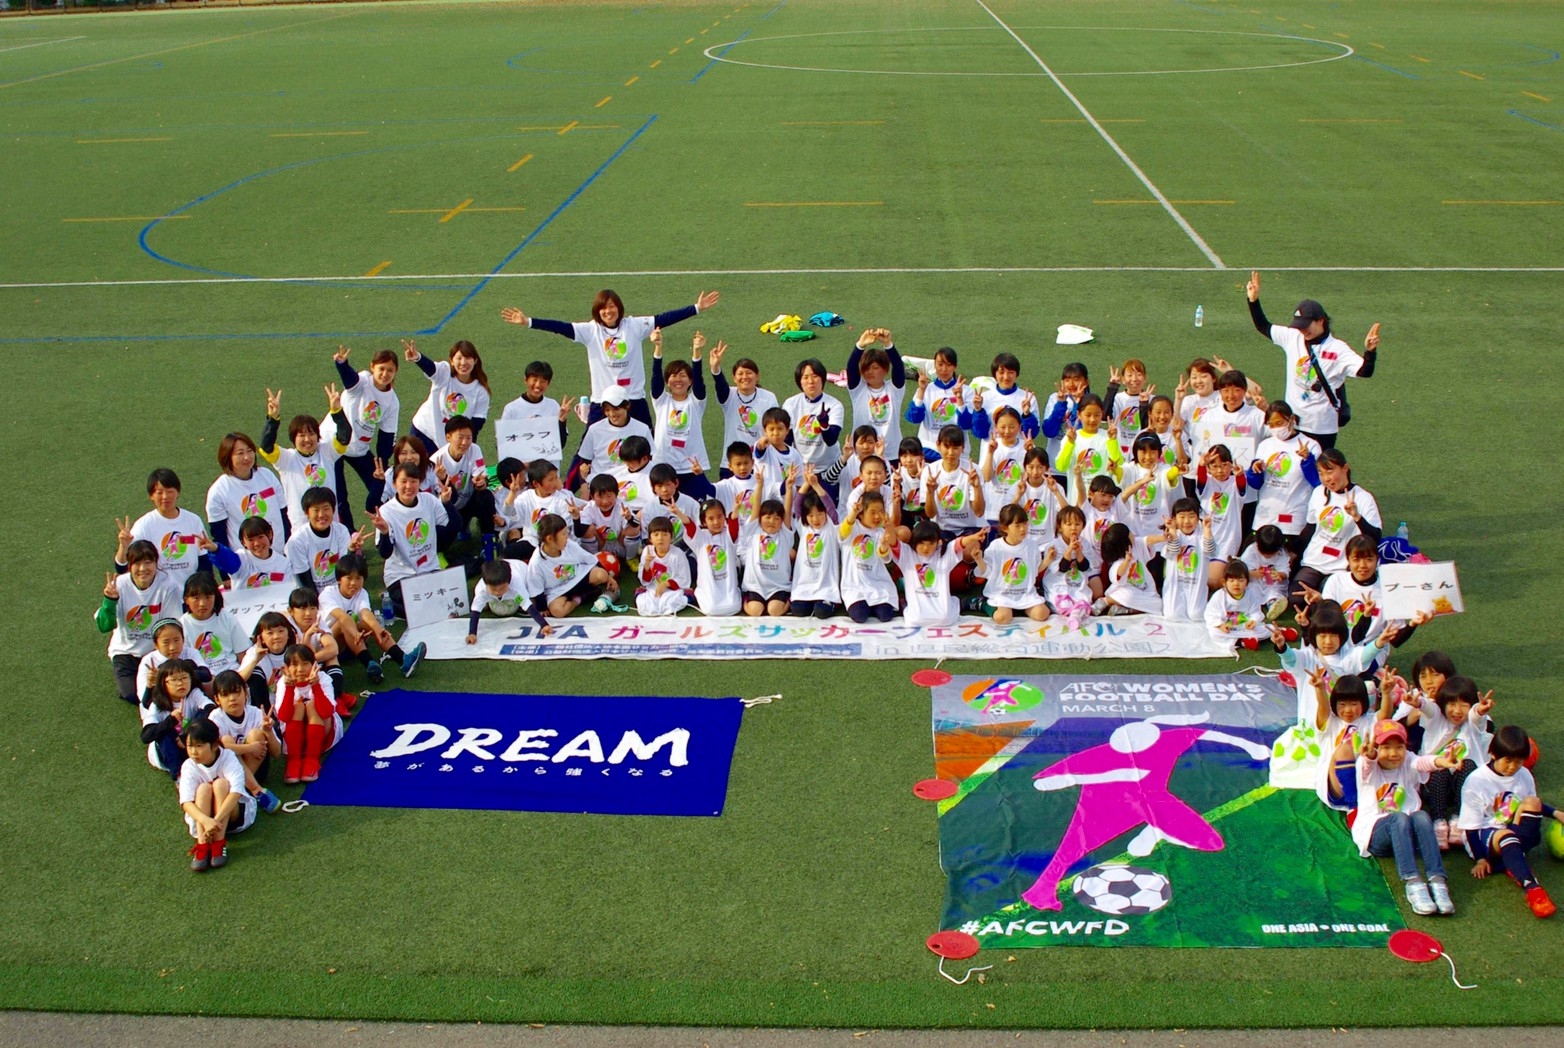 JFAガールズサッカーフェスティバル in 熊本県民総合運動公園 スポーツ広場